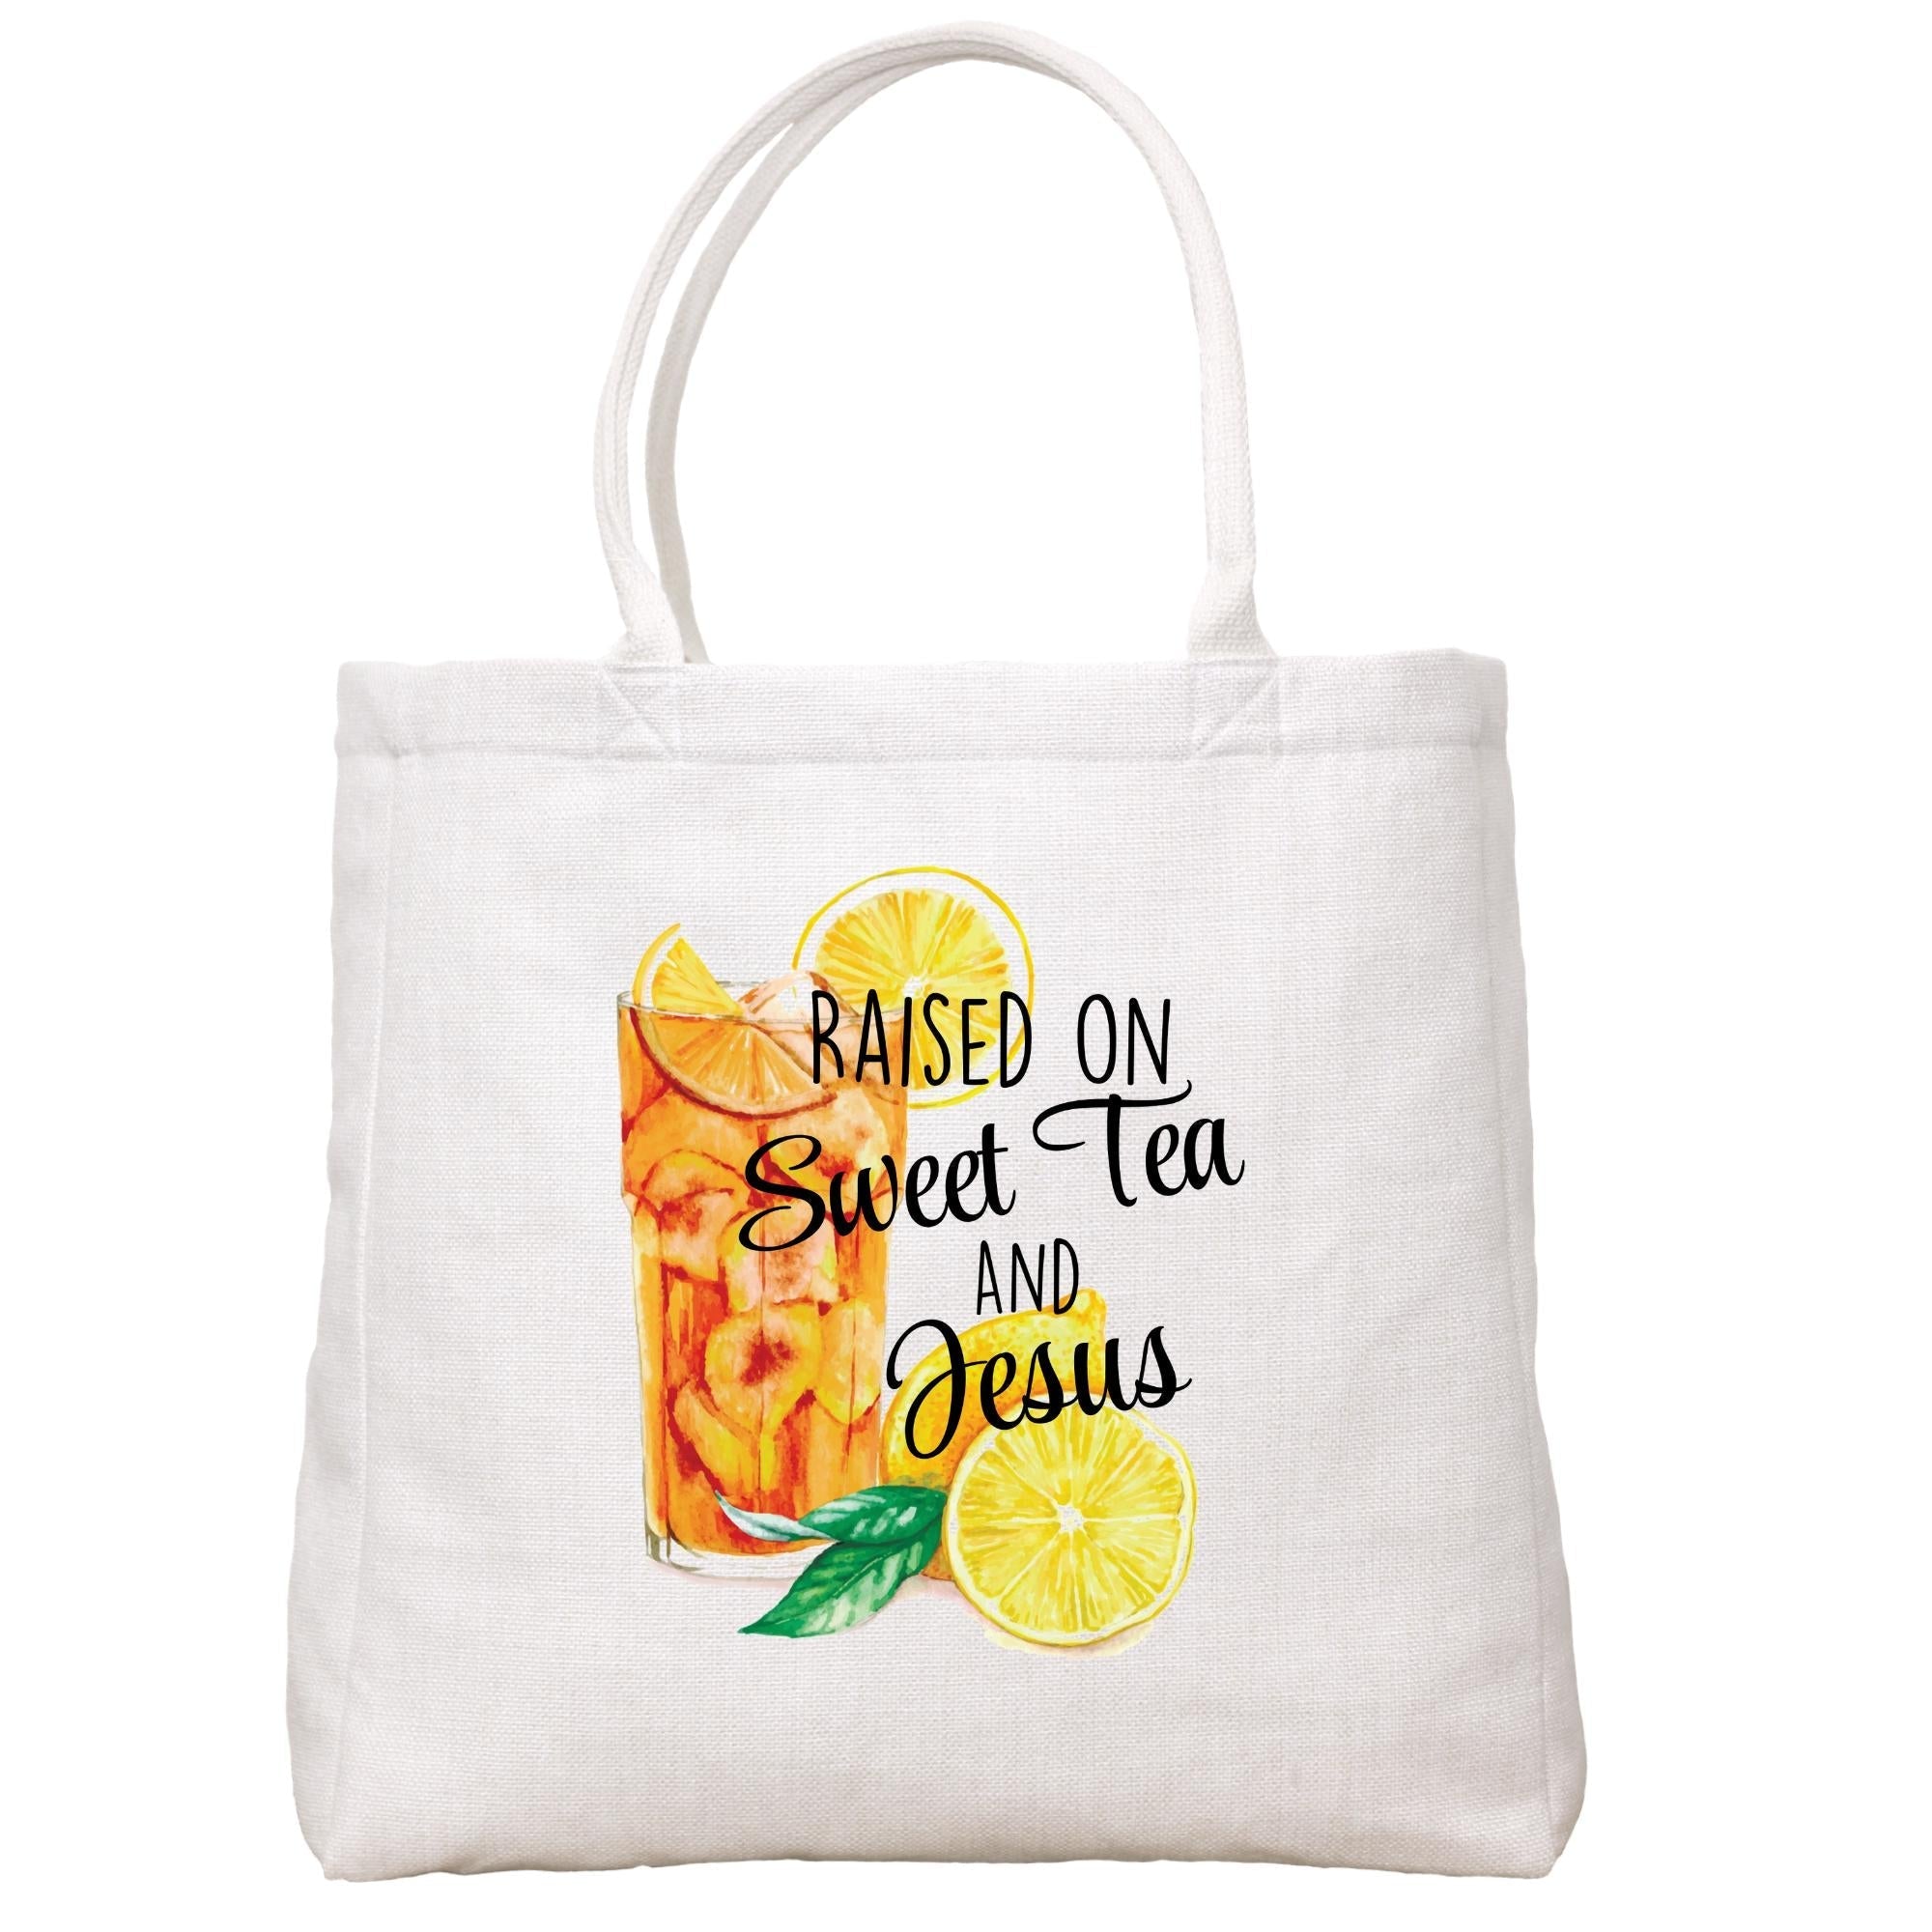 Sweet Tea And Jesus Tote Bag Tote Bag - Southern Sisters